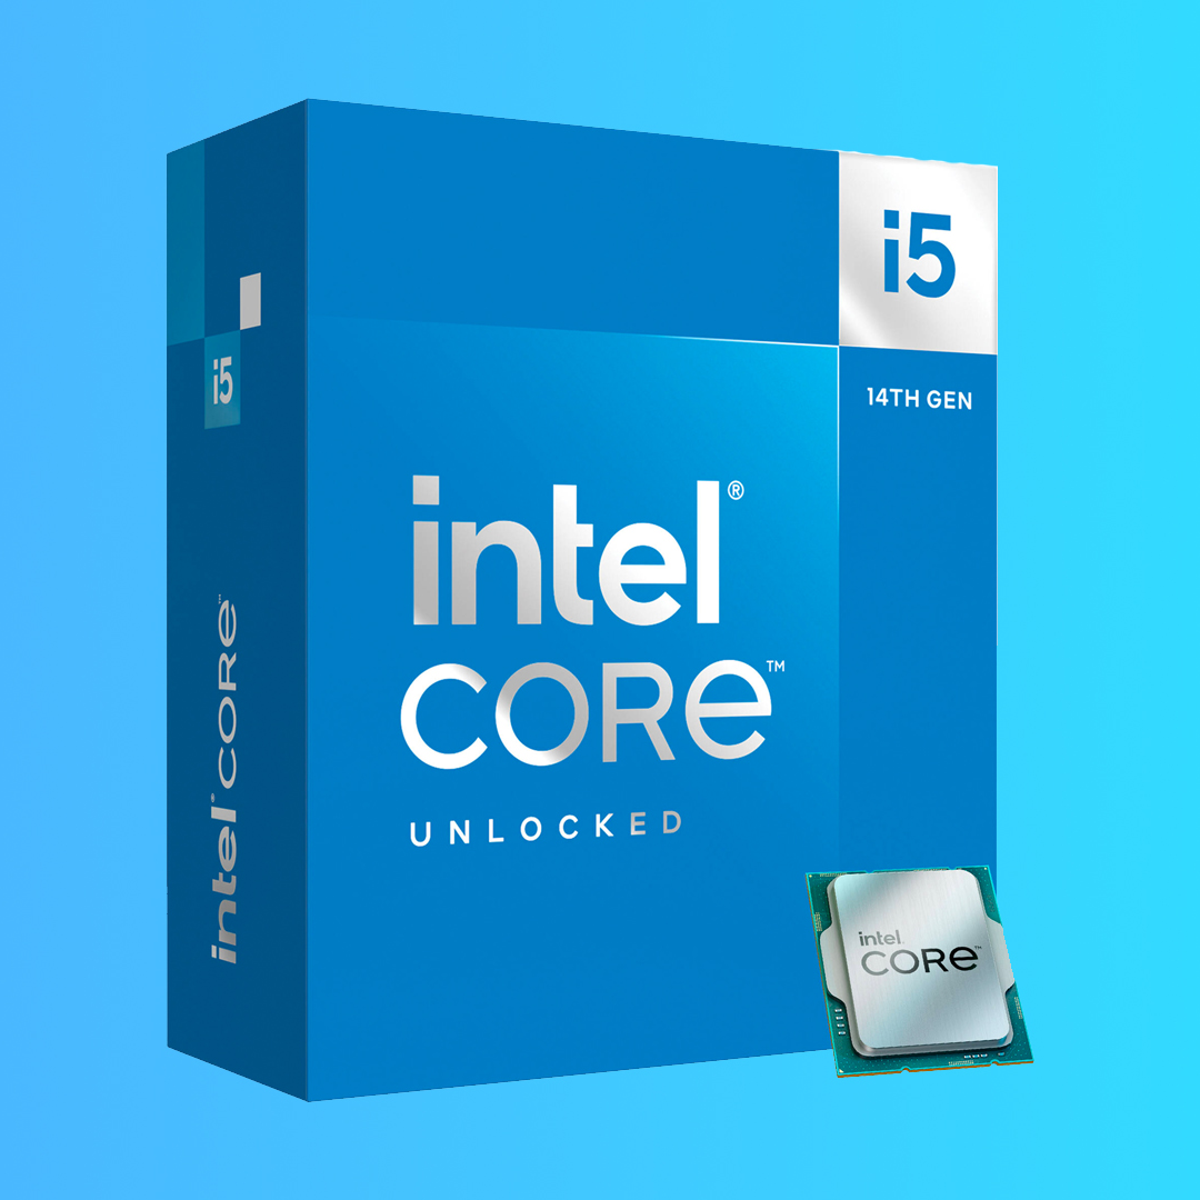 This brand-new Intel Core i5-14600K CPU has already had a big